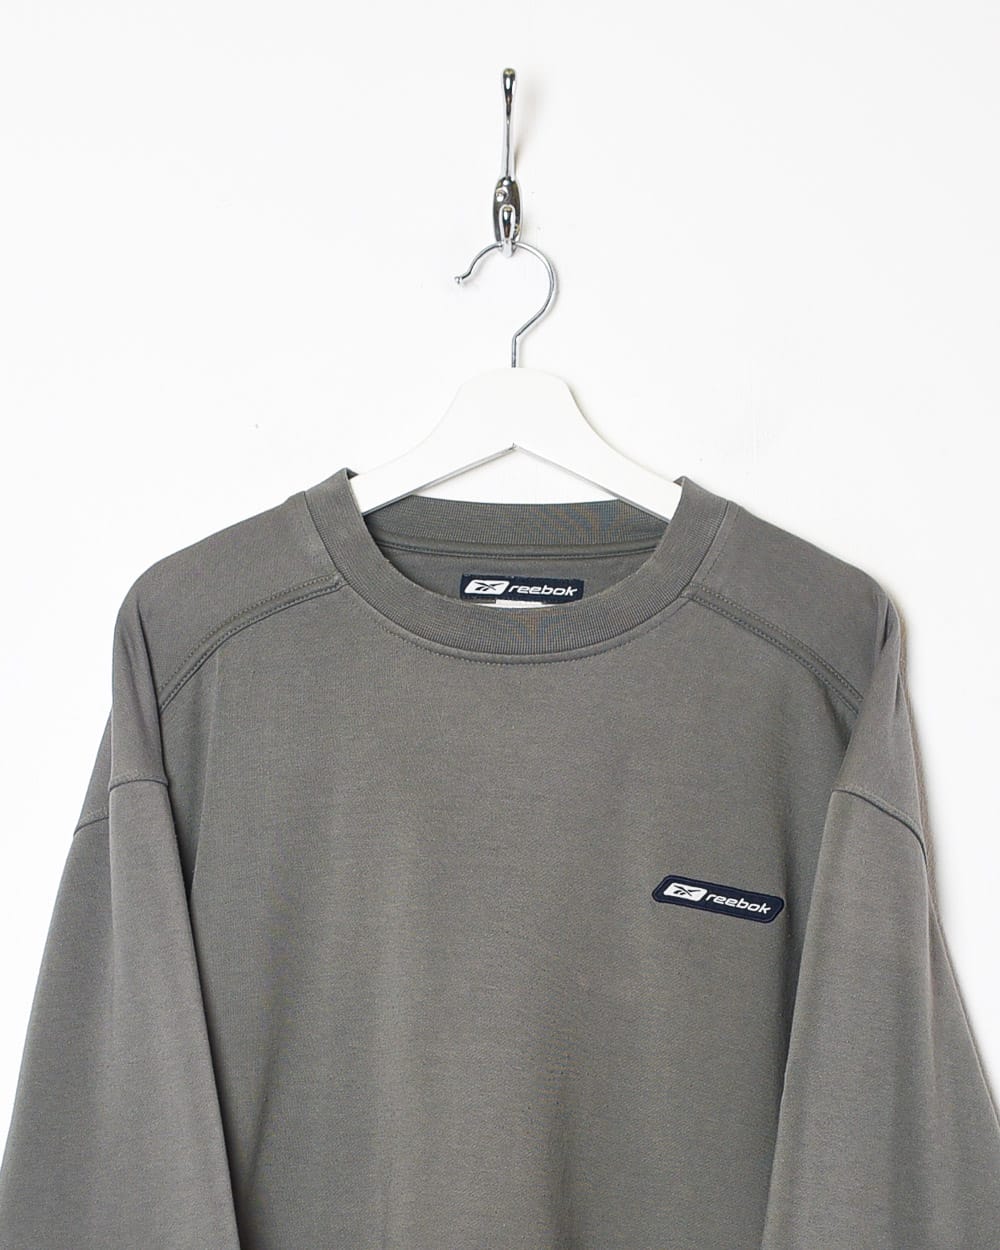 Khaki Reebok Sweatshirt - Medium